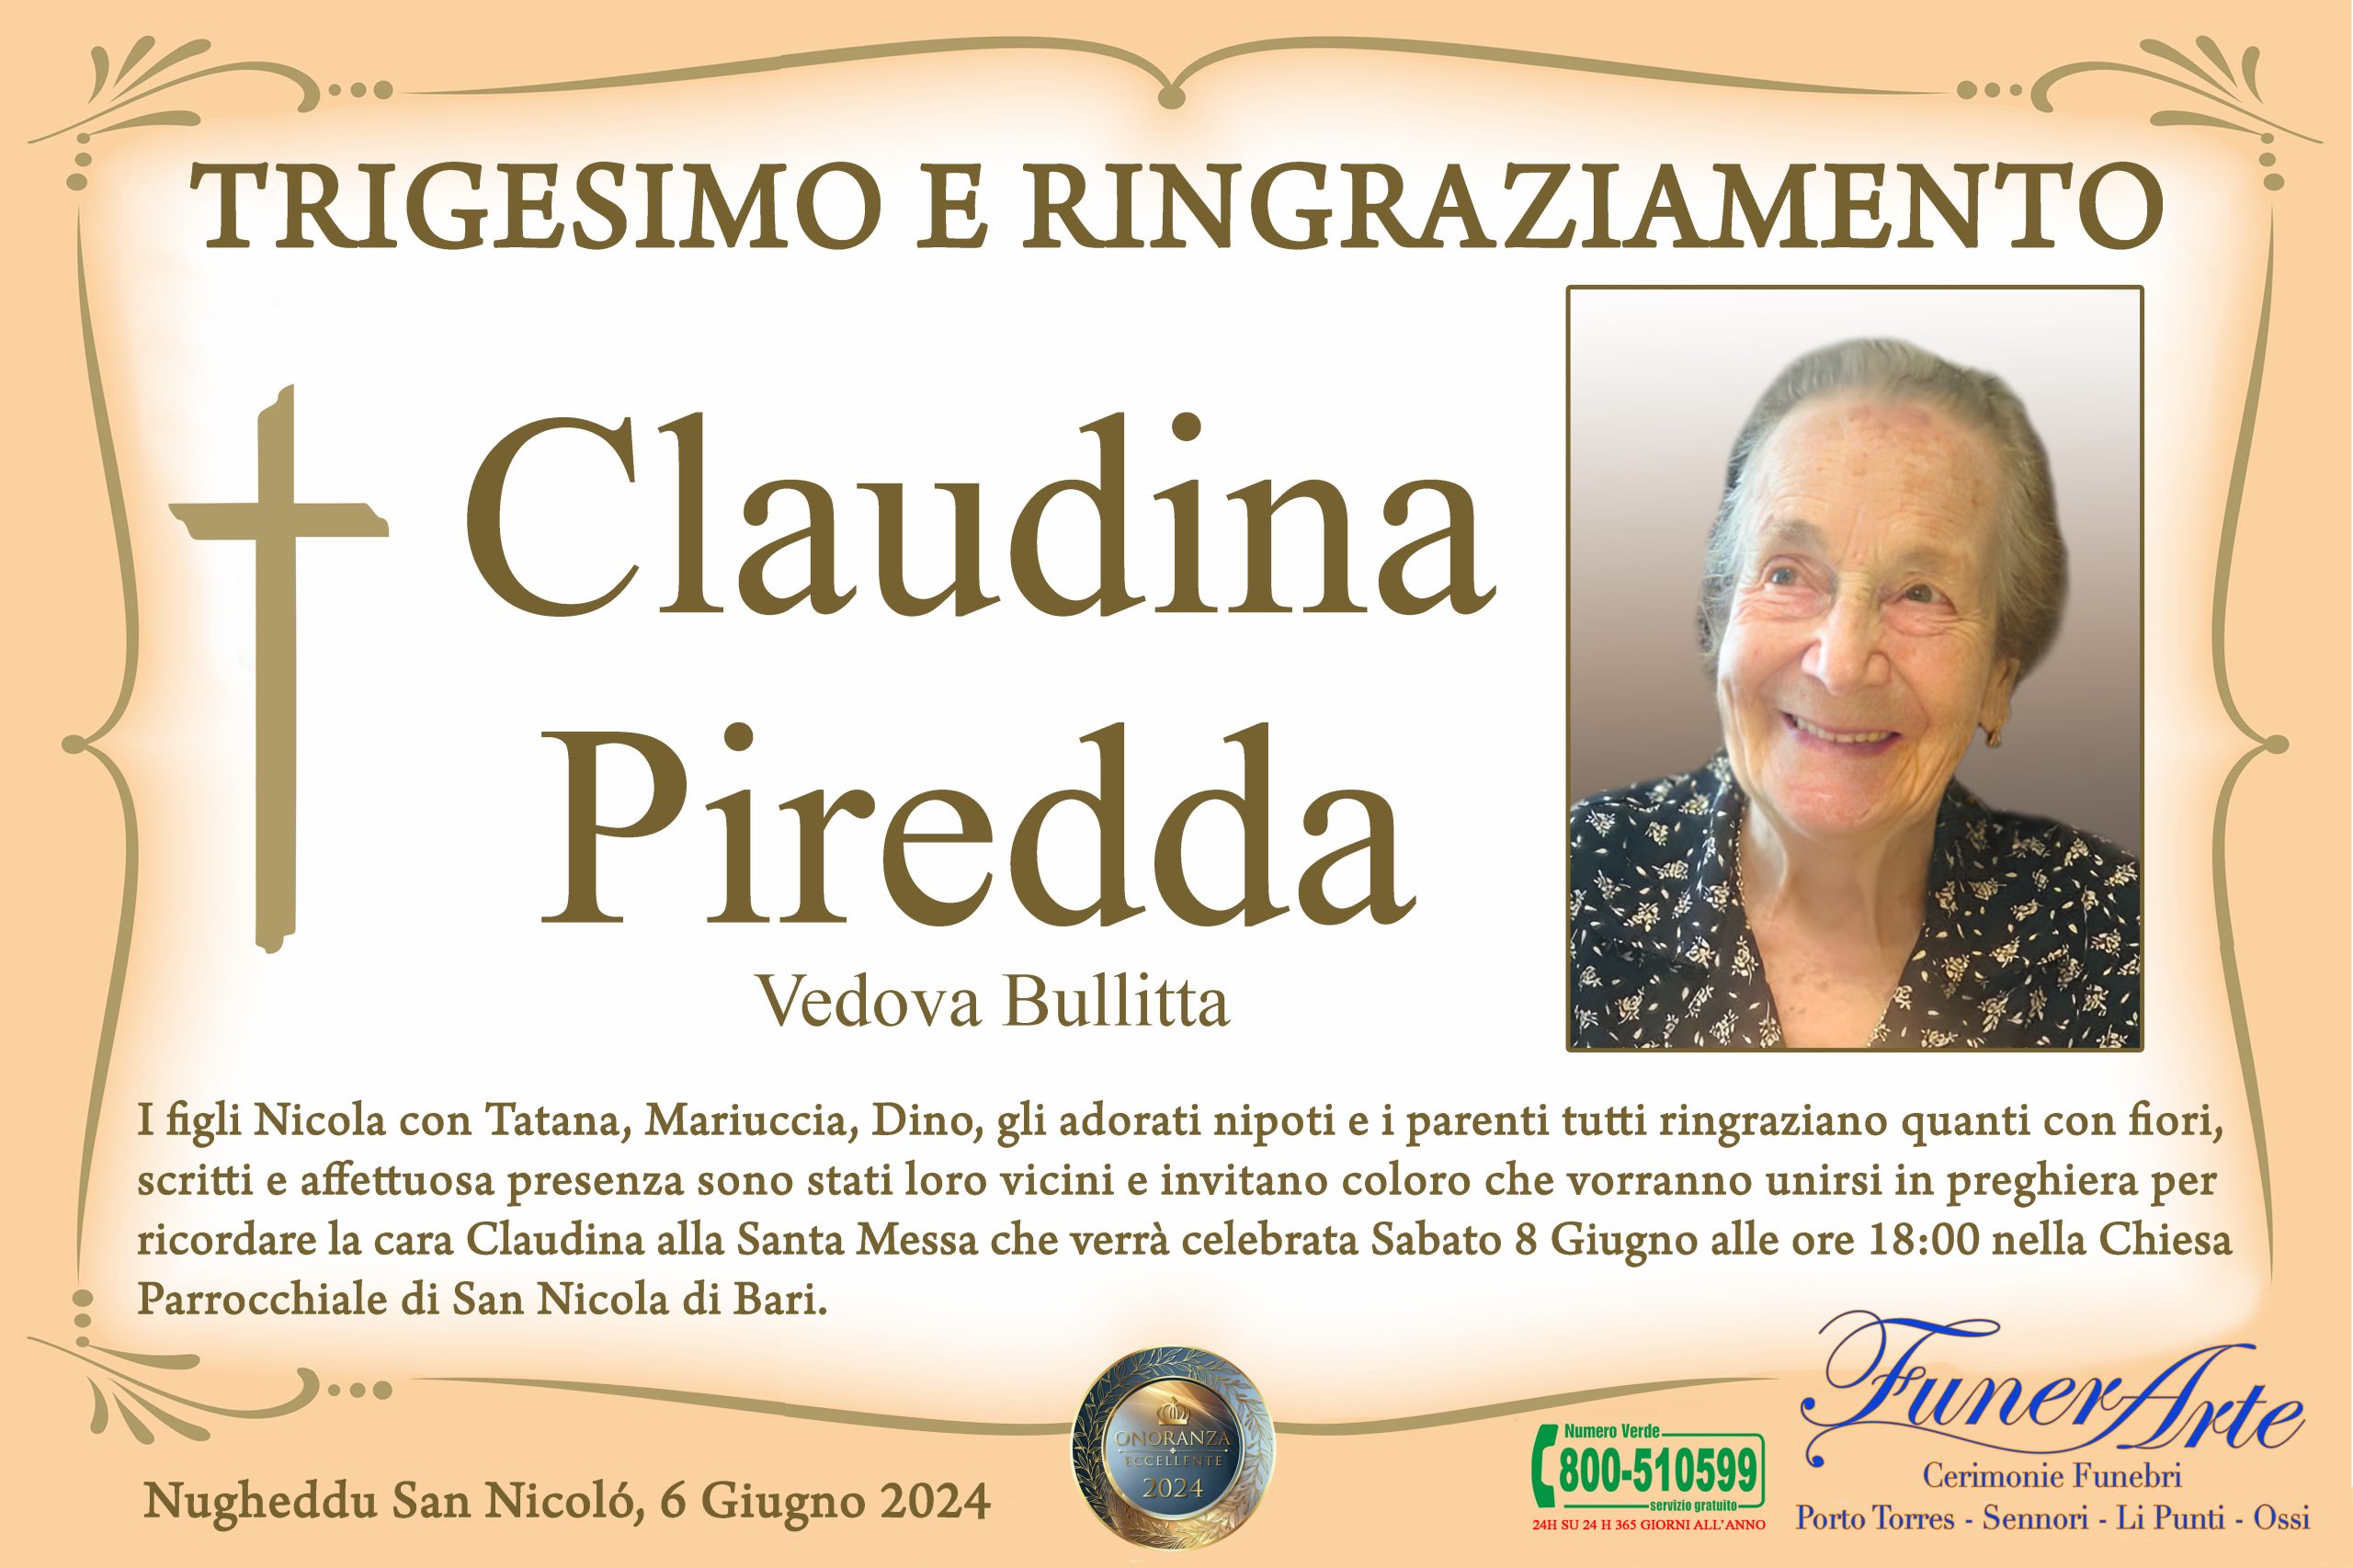 Claudina Piredda